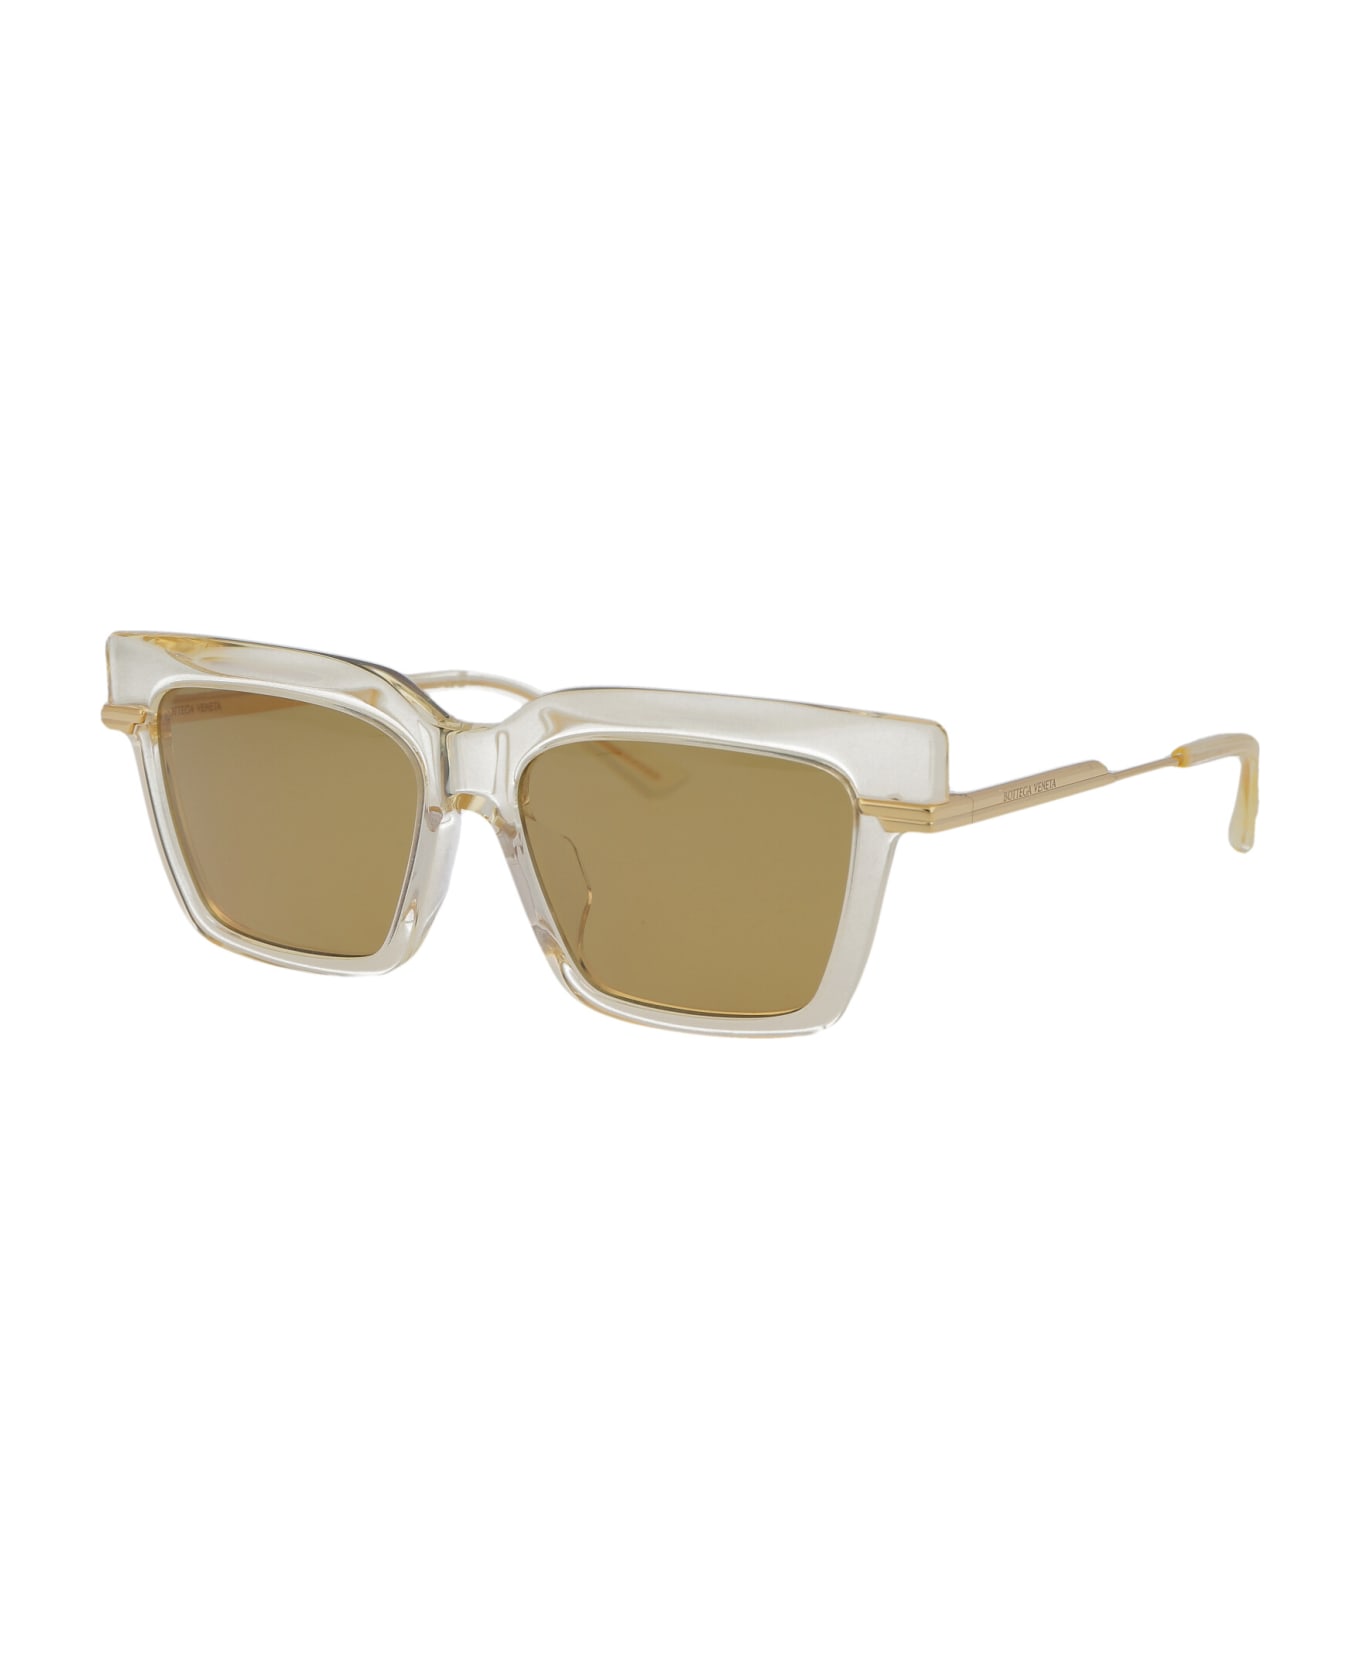 Bottega Veneta Eyewear Bv1242s Sunglasses - 004 YELLOW GOLD YELLOW